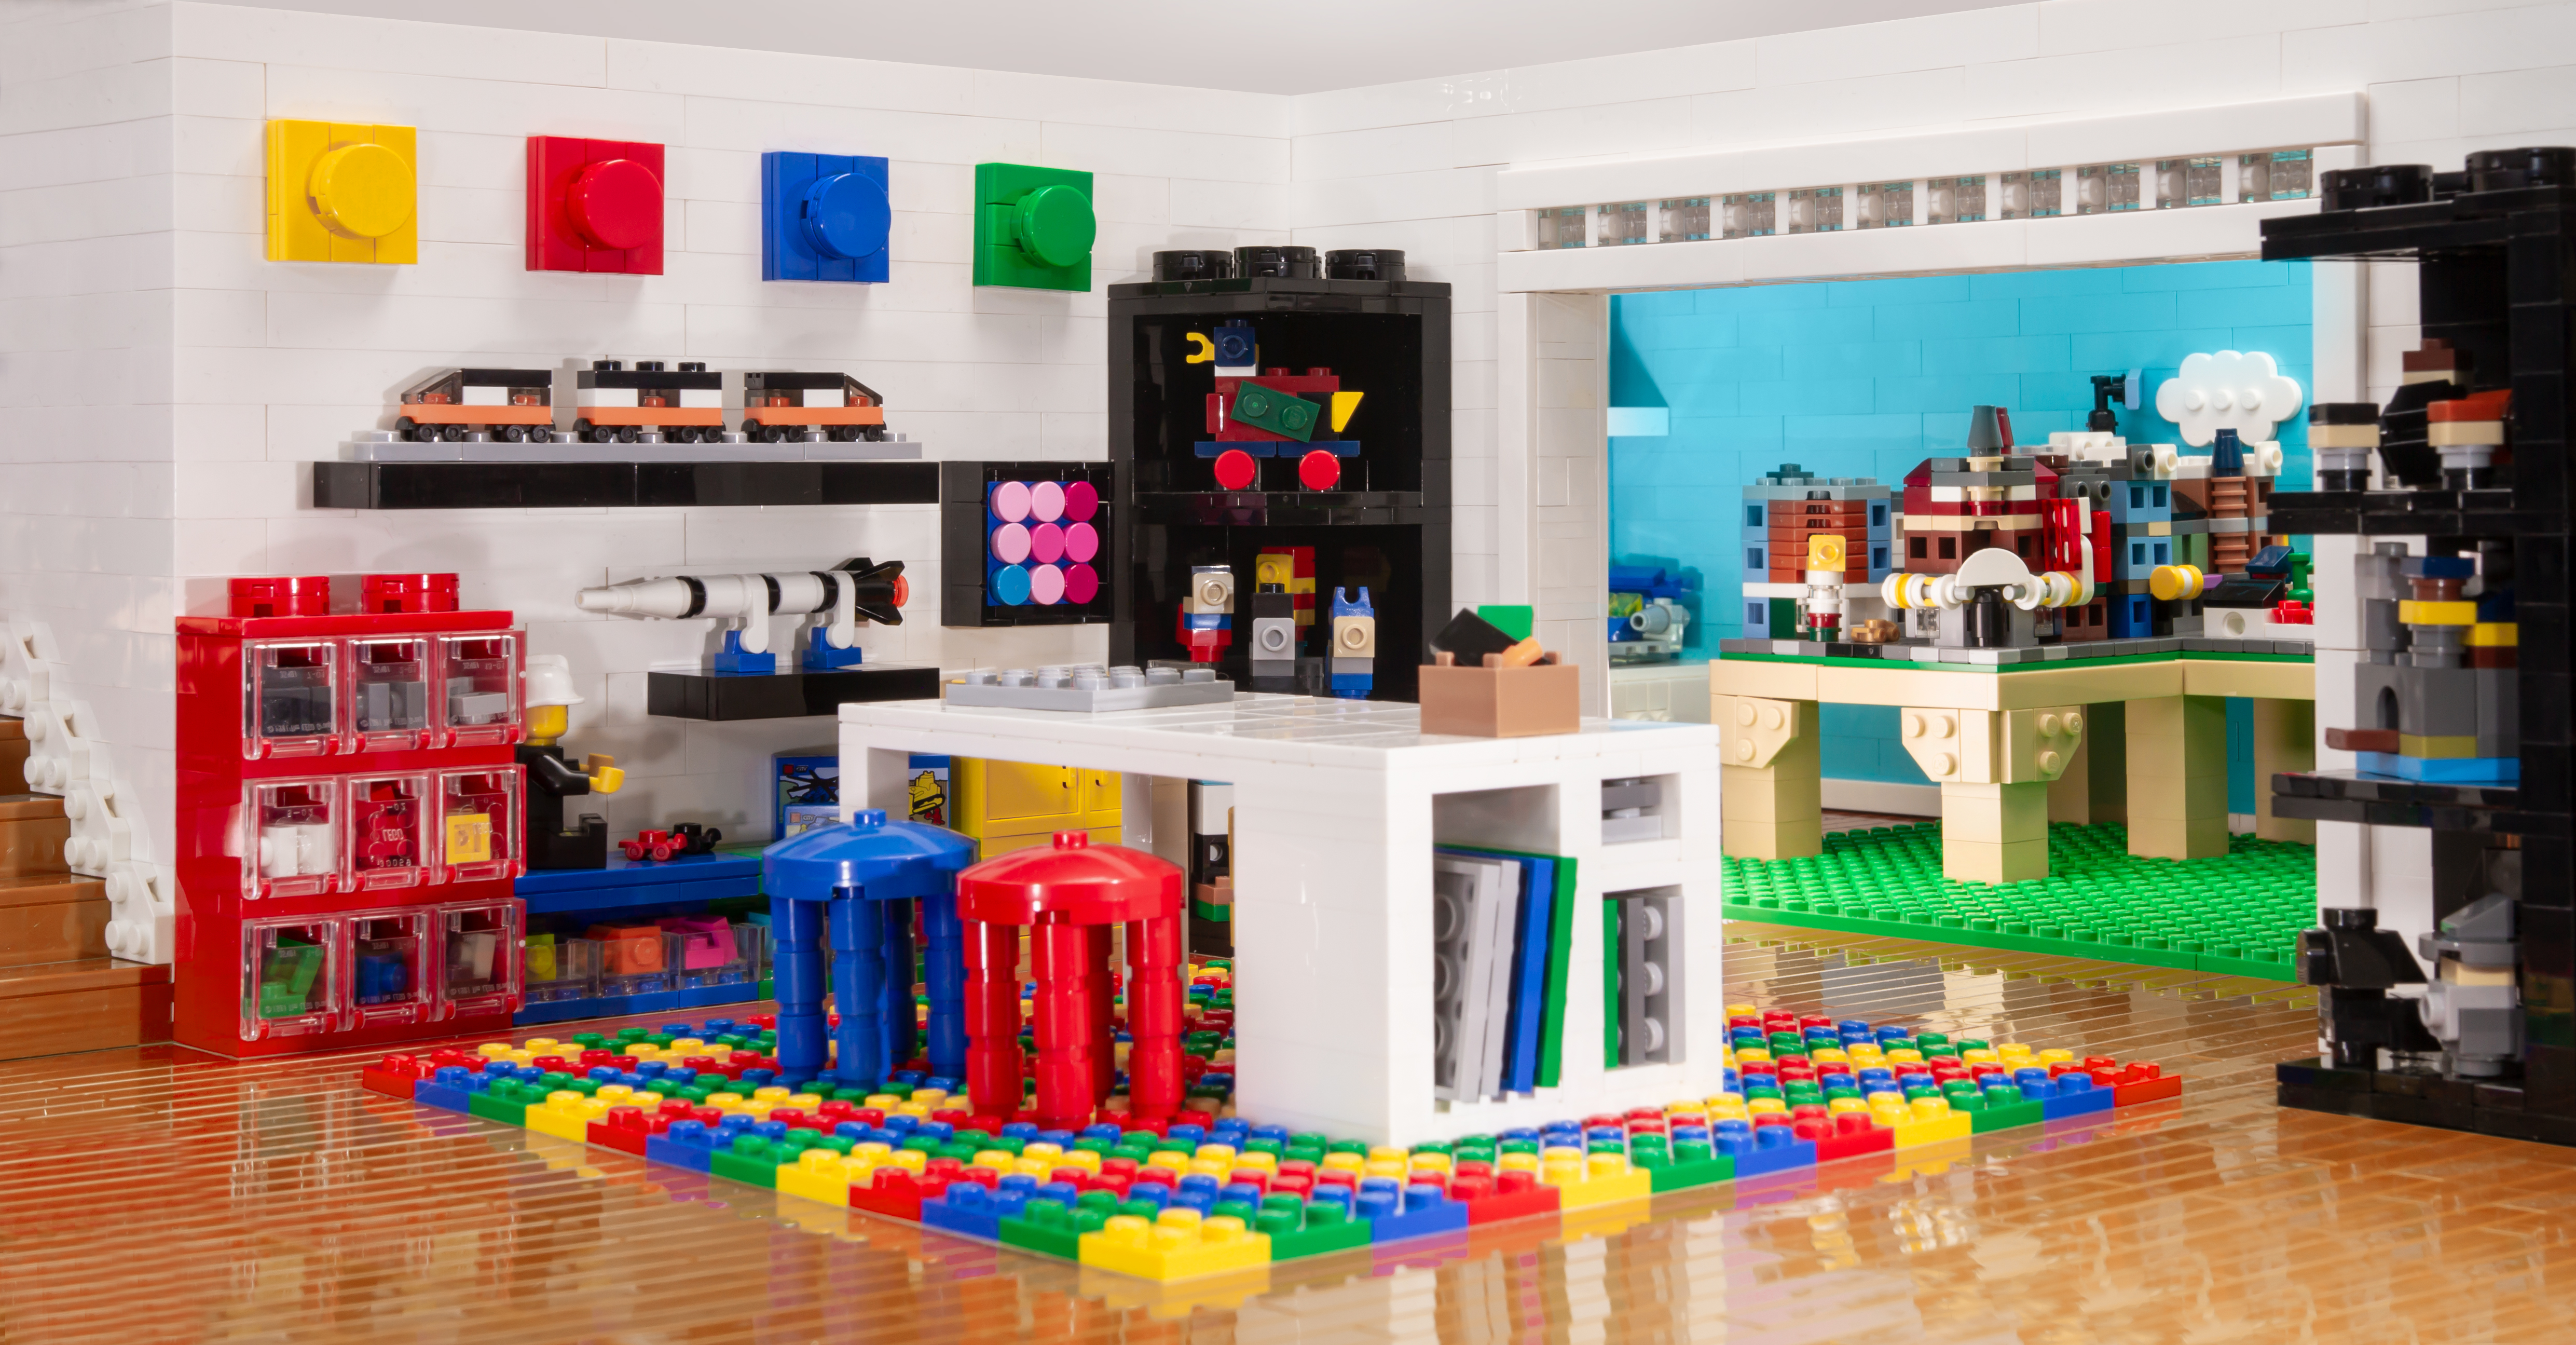 LEGO Beach Home LEGO Room